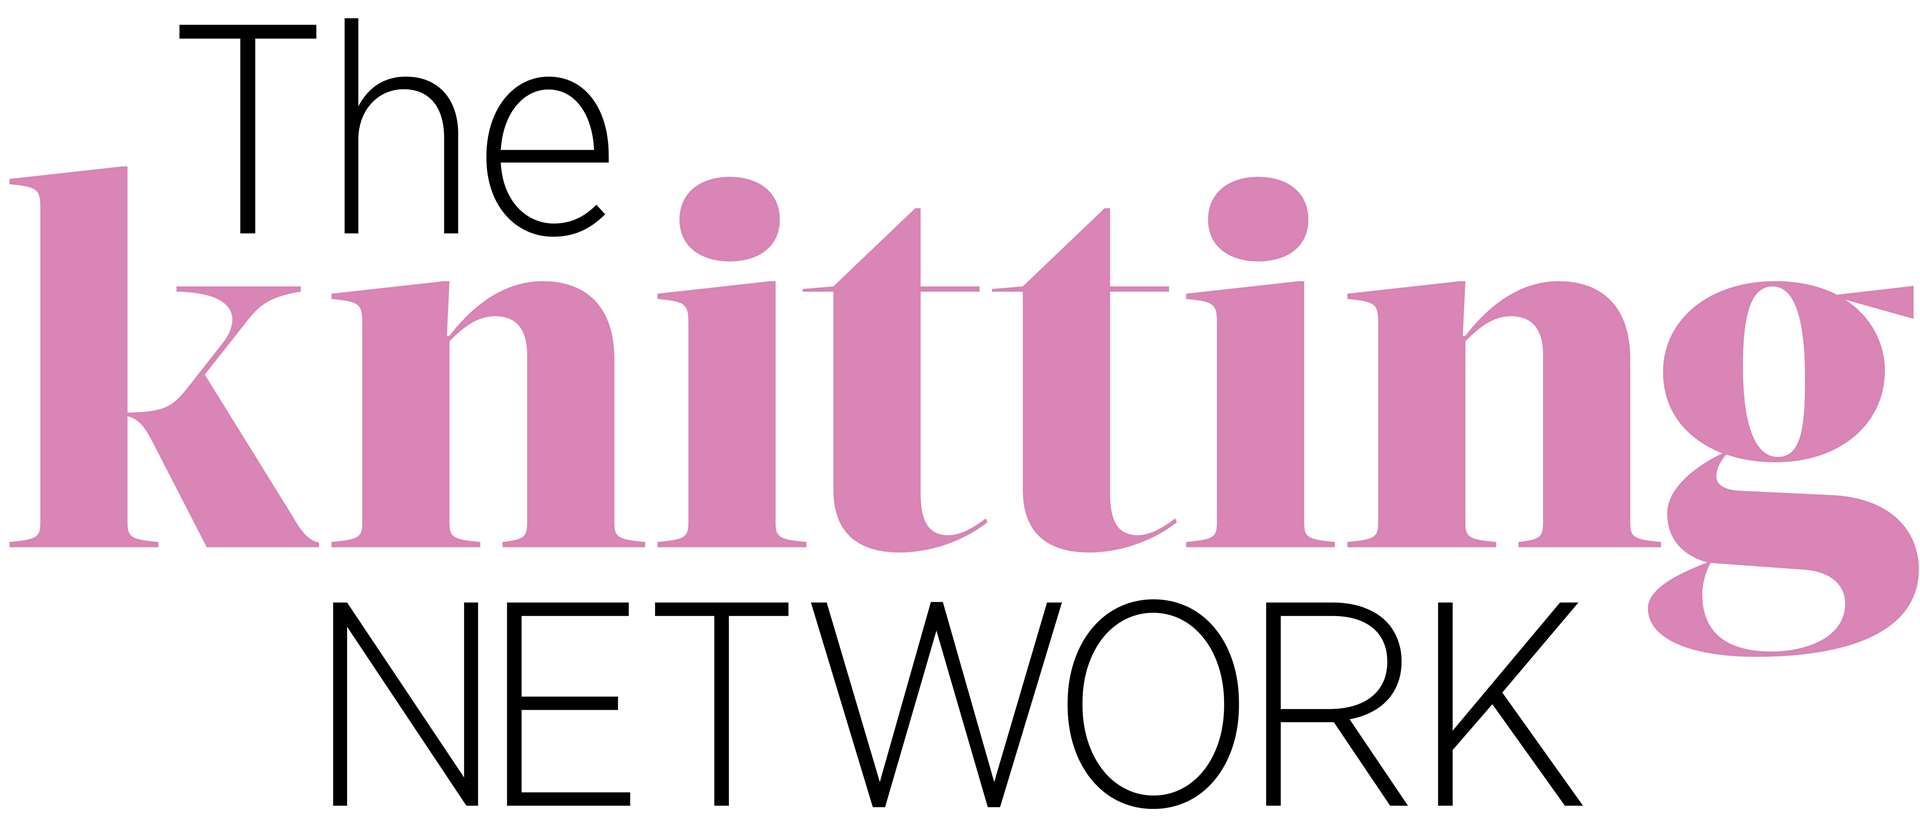 Knitting Network is based at the Eurolink, near Sittingbourne